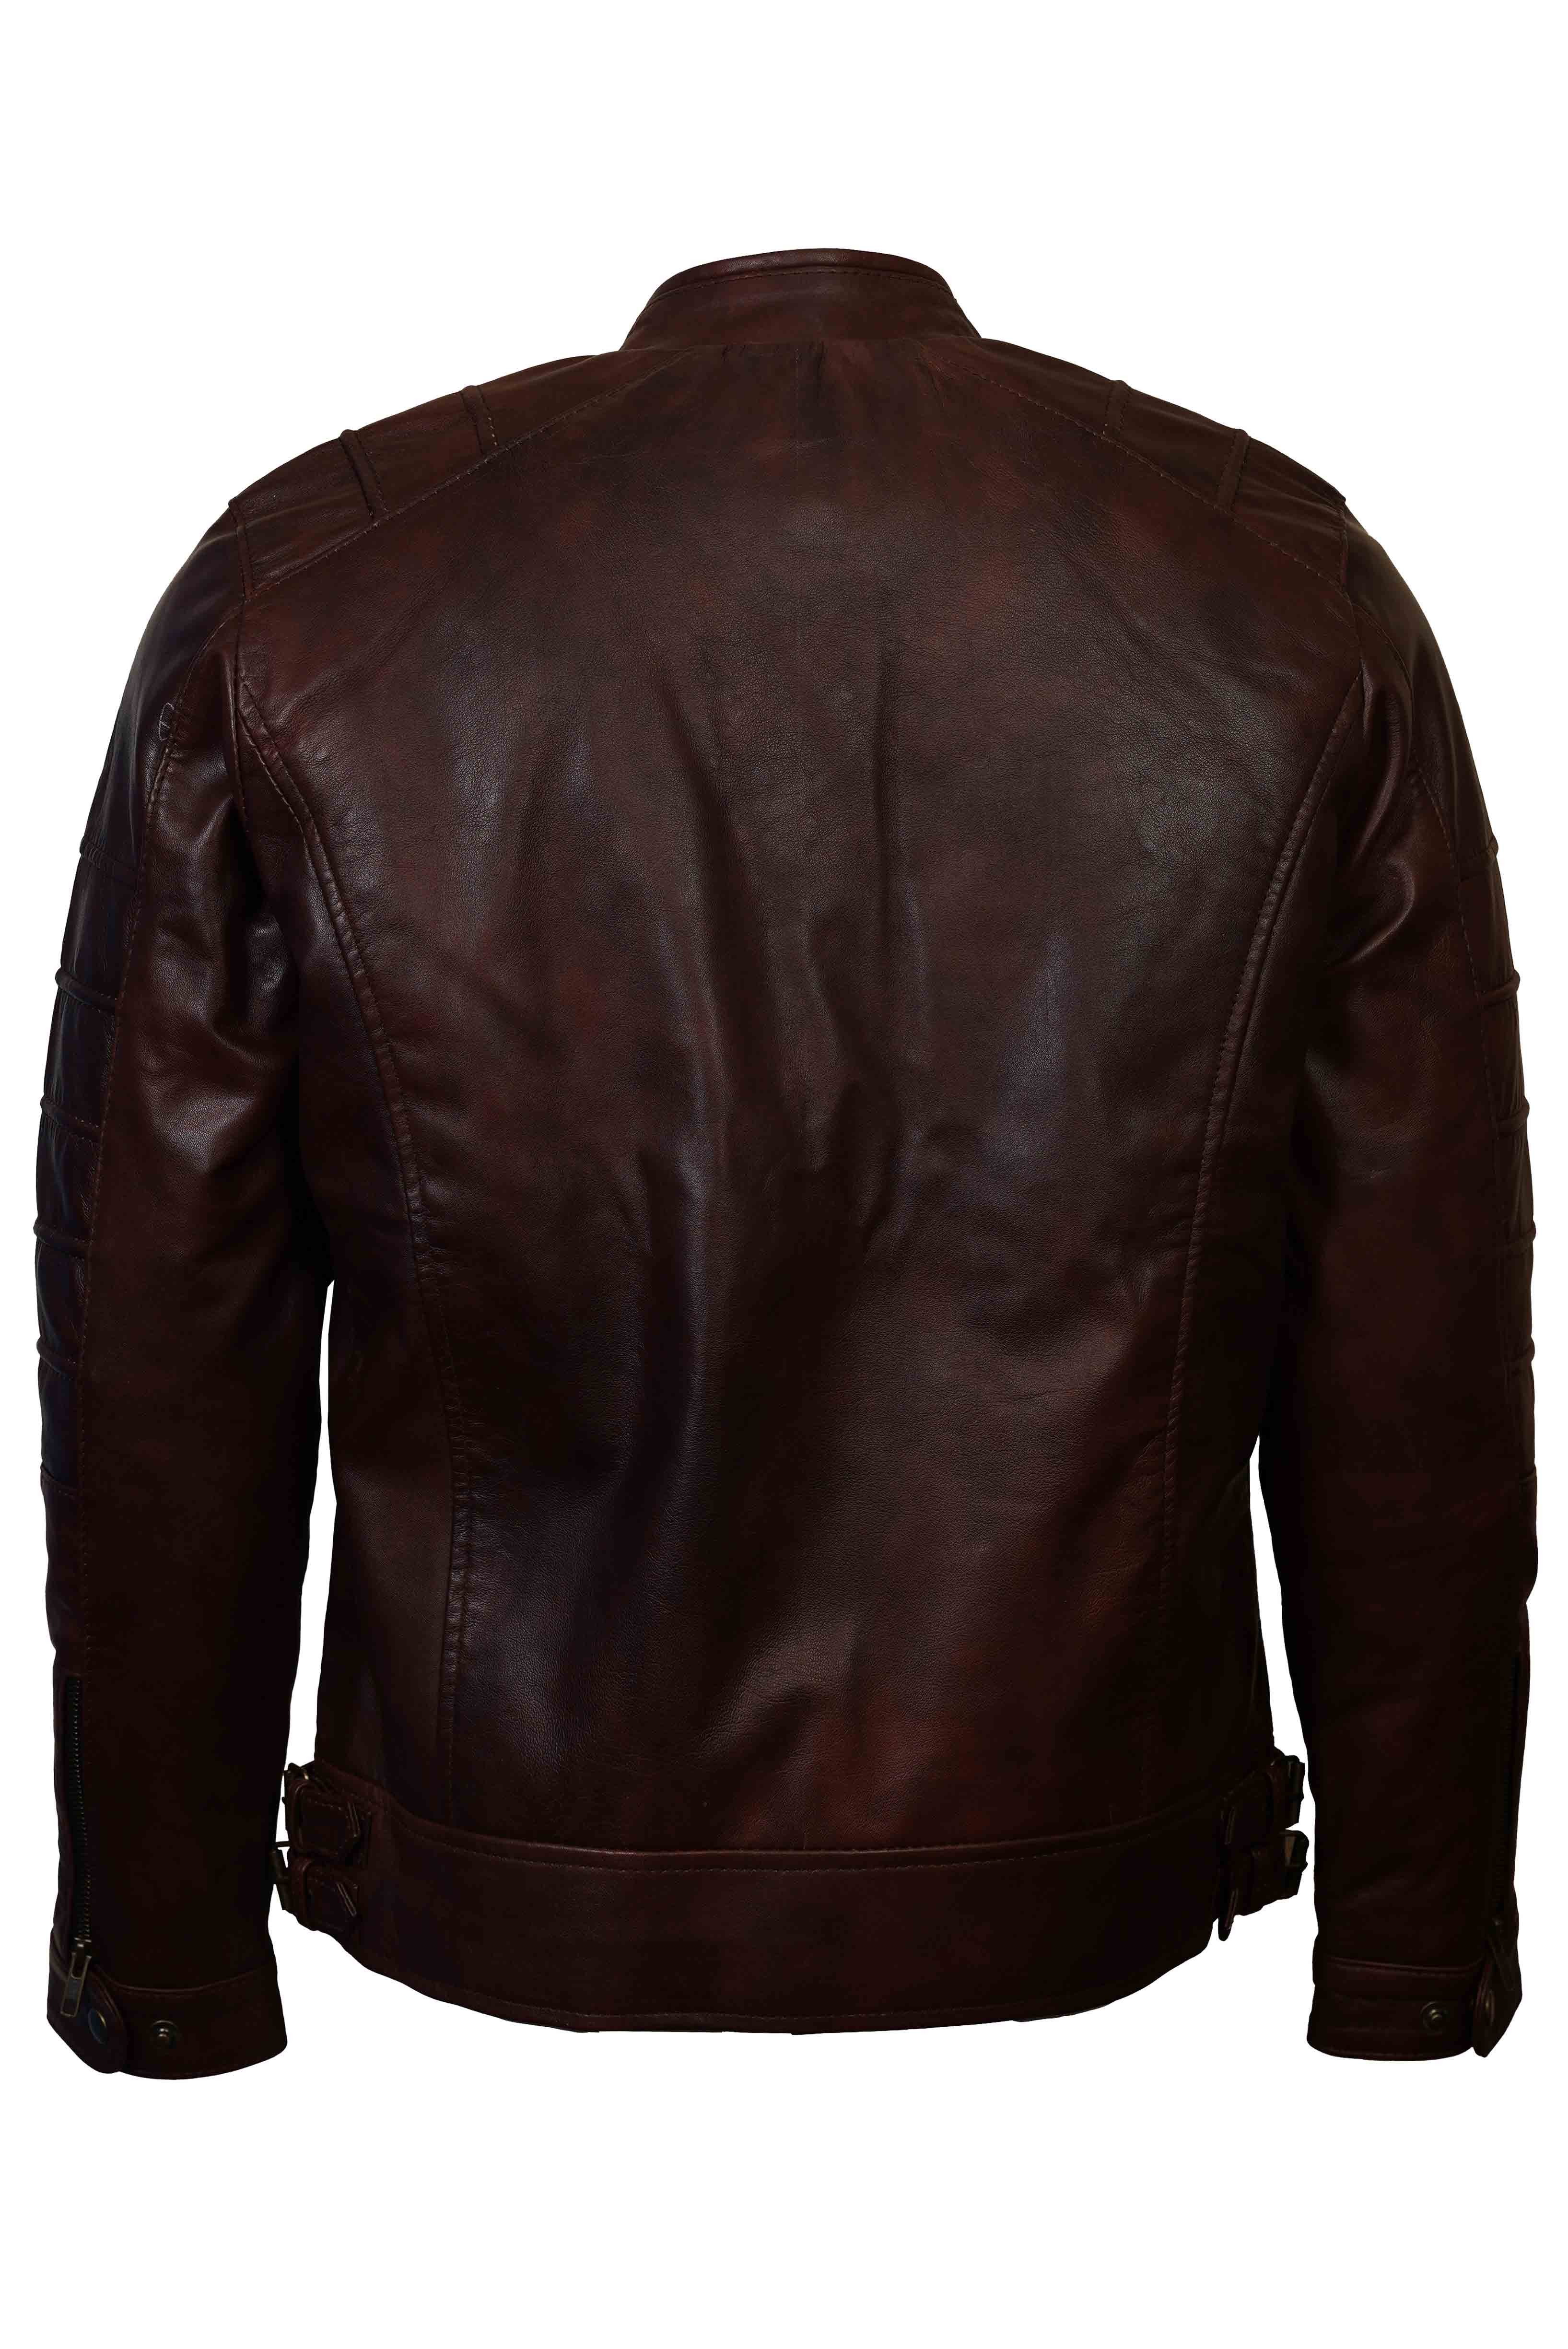 Aone Orange-Antic Jacket Men's Leather Jacket in Nepal